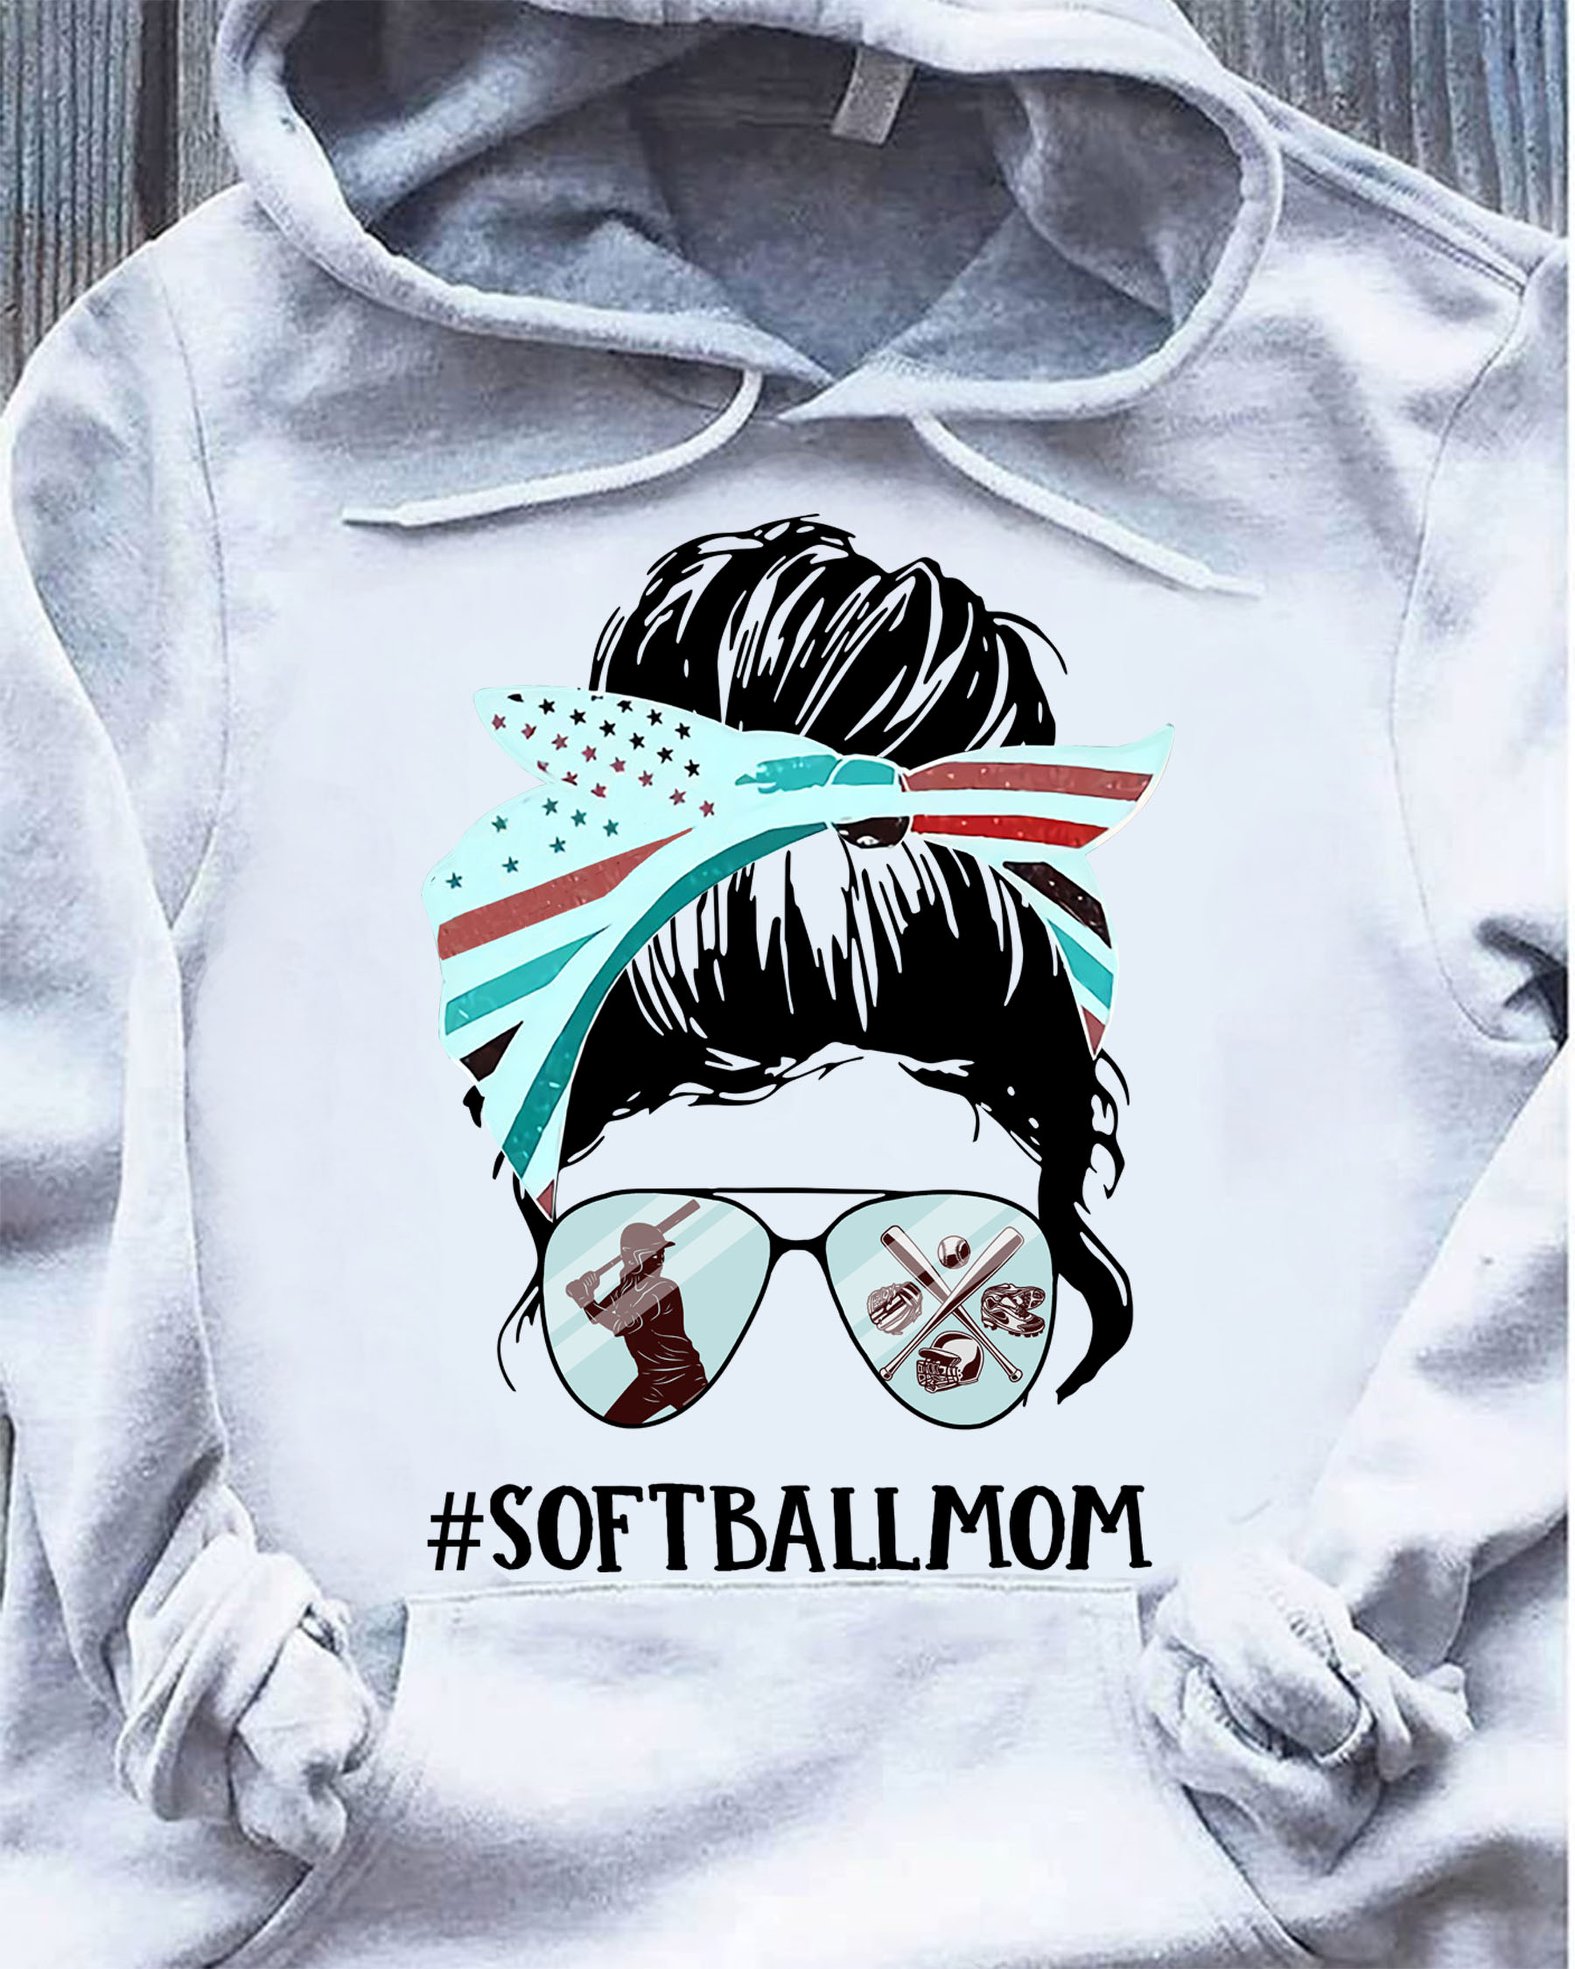 Softball mom - Mother's day, mom loves softball